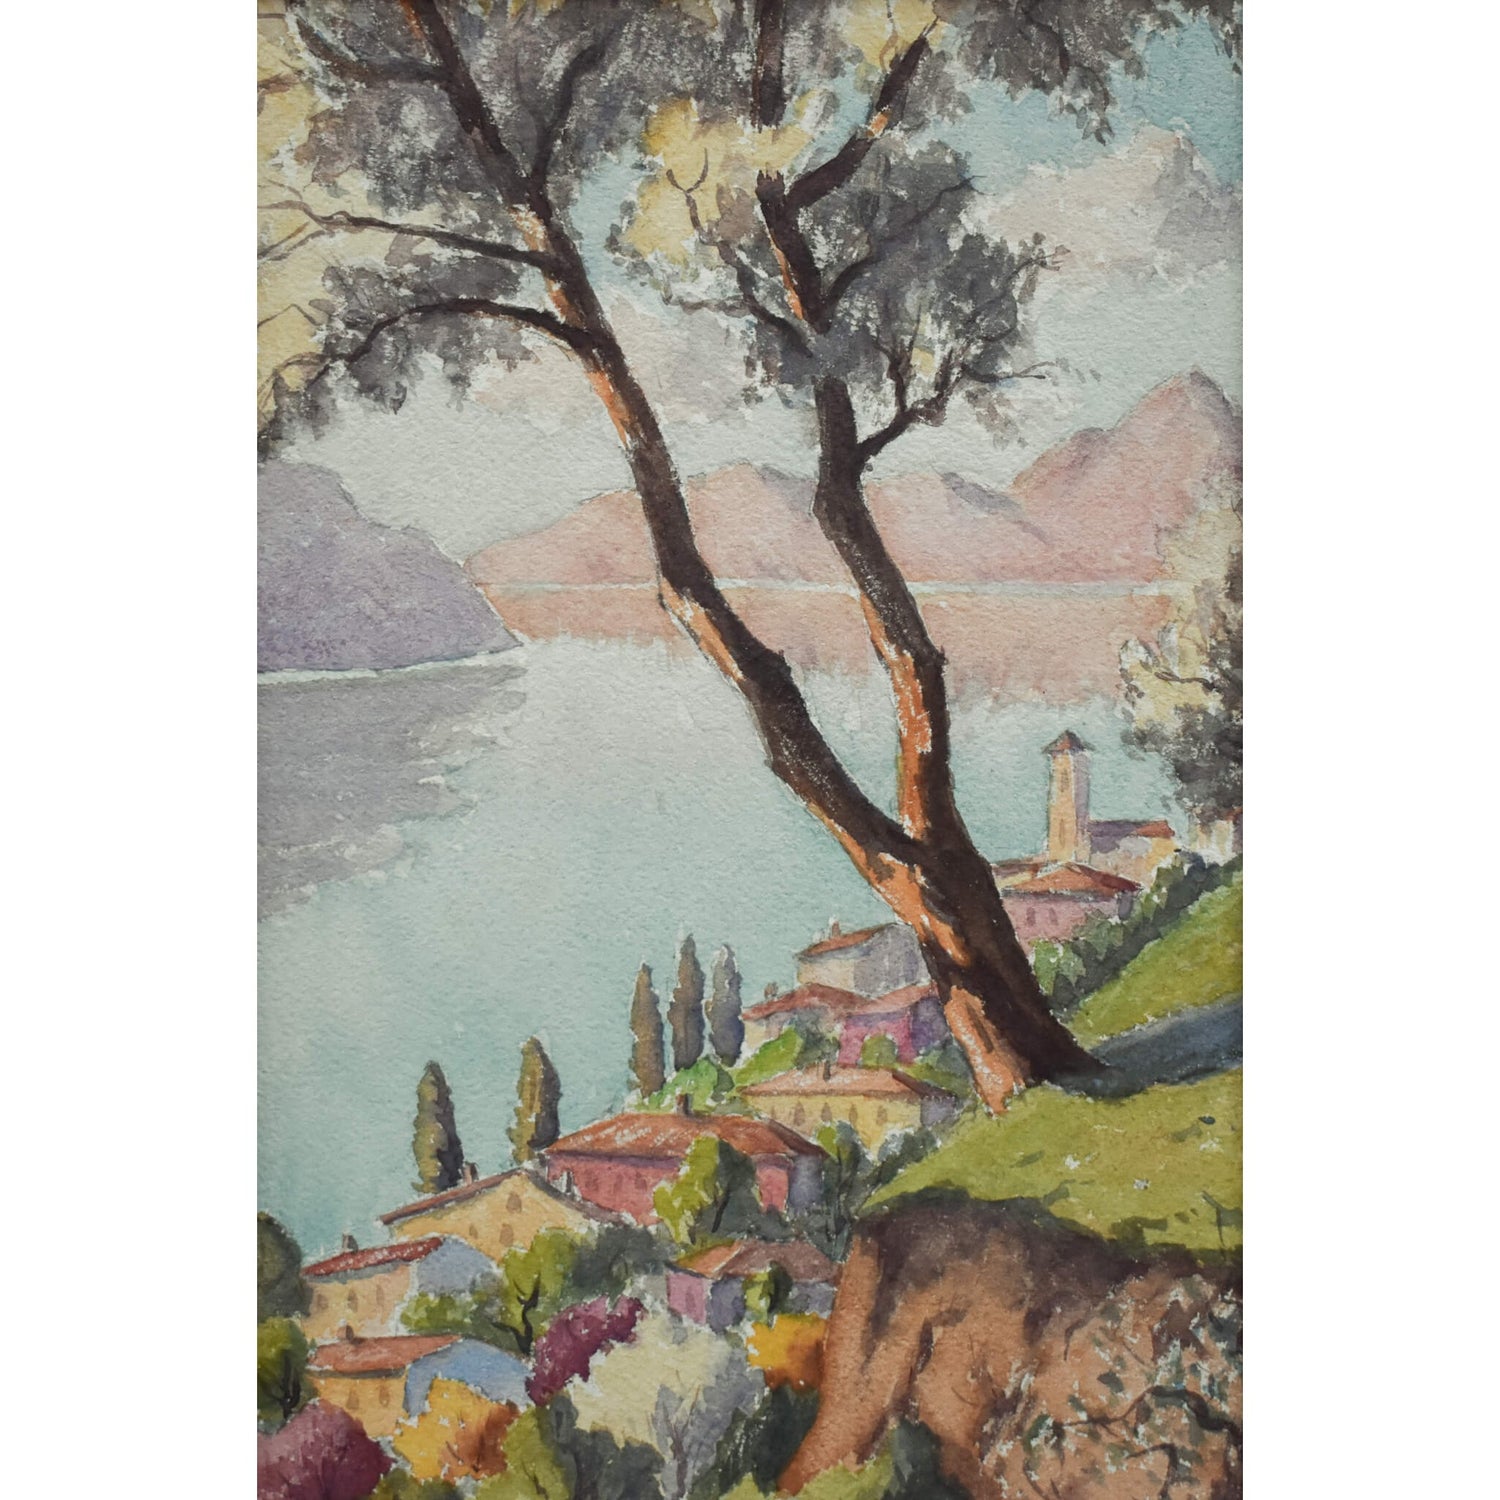 Vintage landscape watercolour painting village lake mountains view circa 1950 for sale at Winckelmann Gallery.